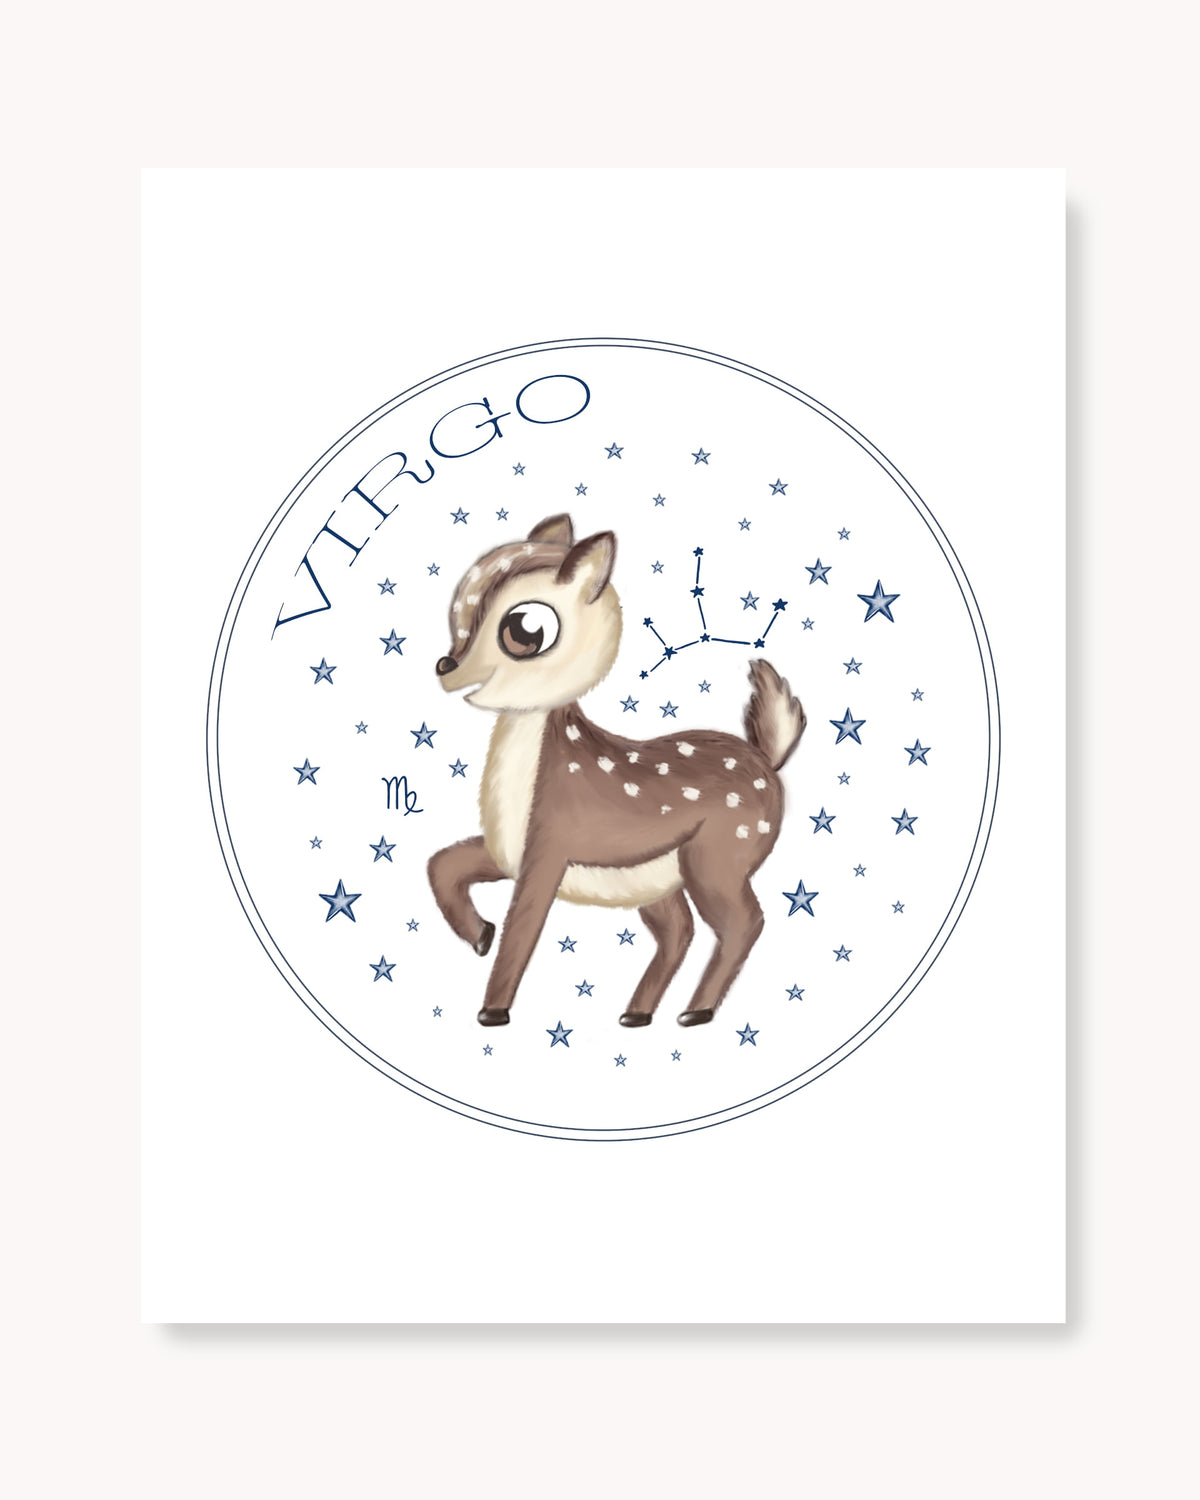 Hand drawn stars zodiac nursery decor wall art poster Virgo cute baby deer woodland animal